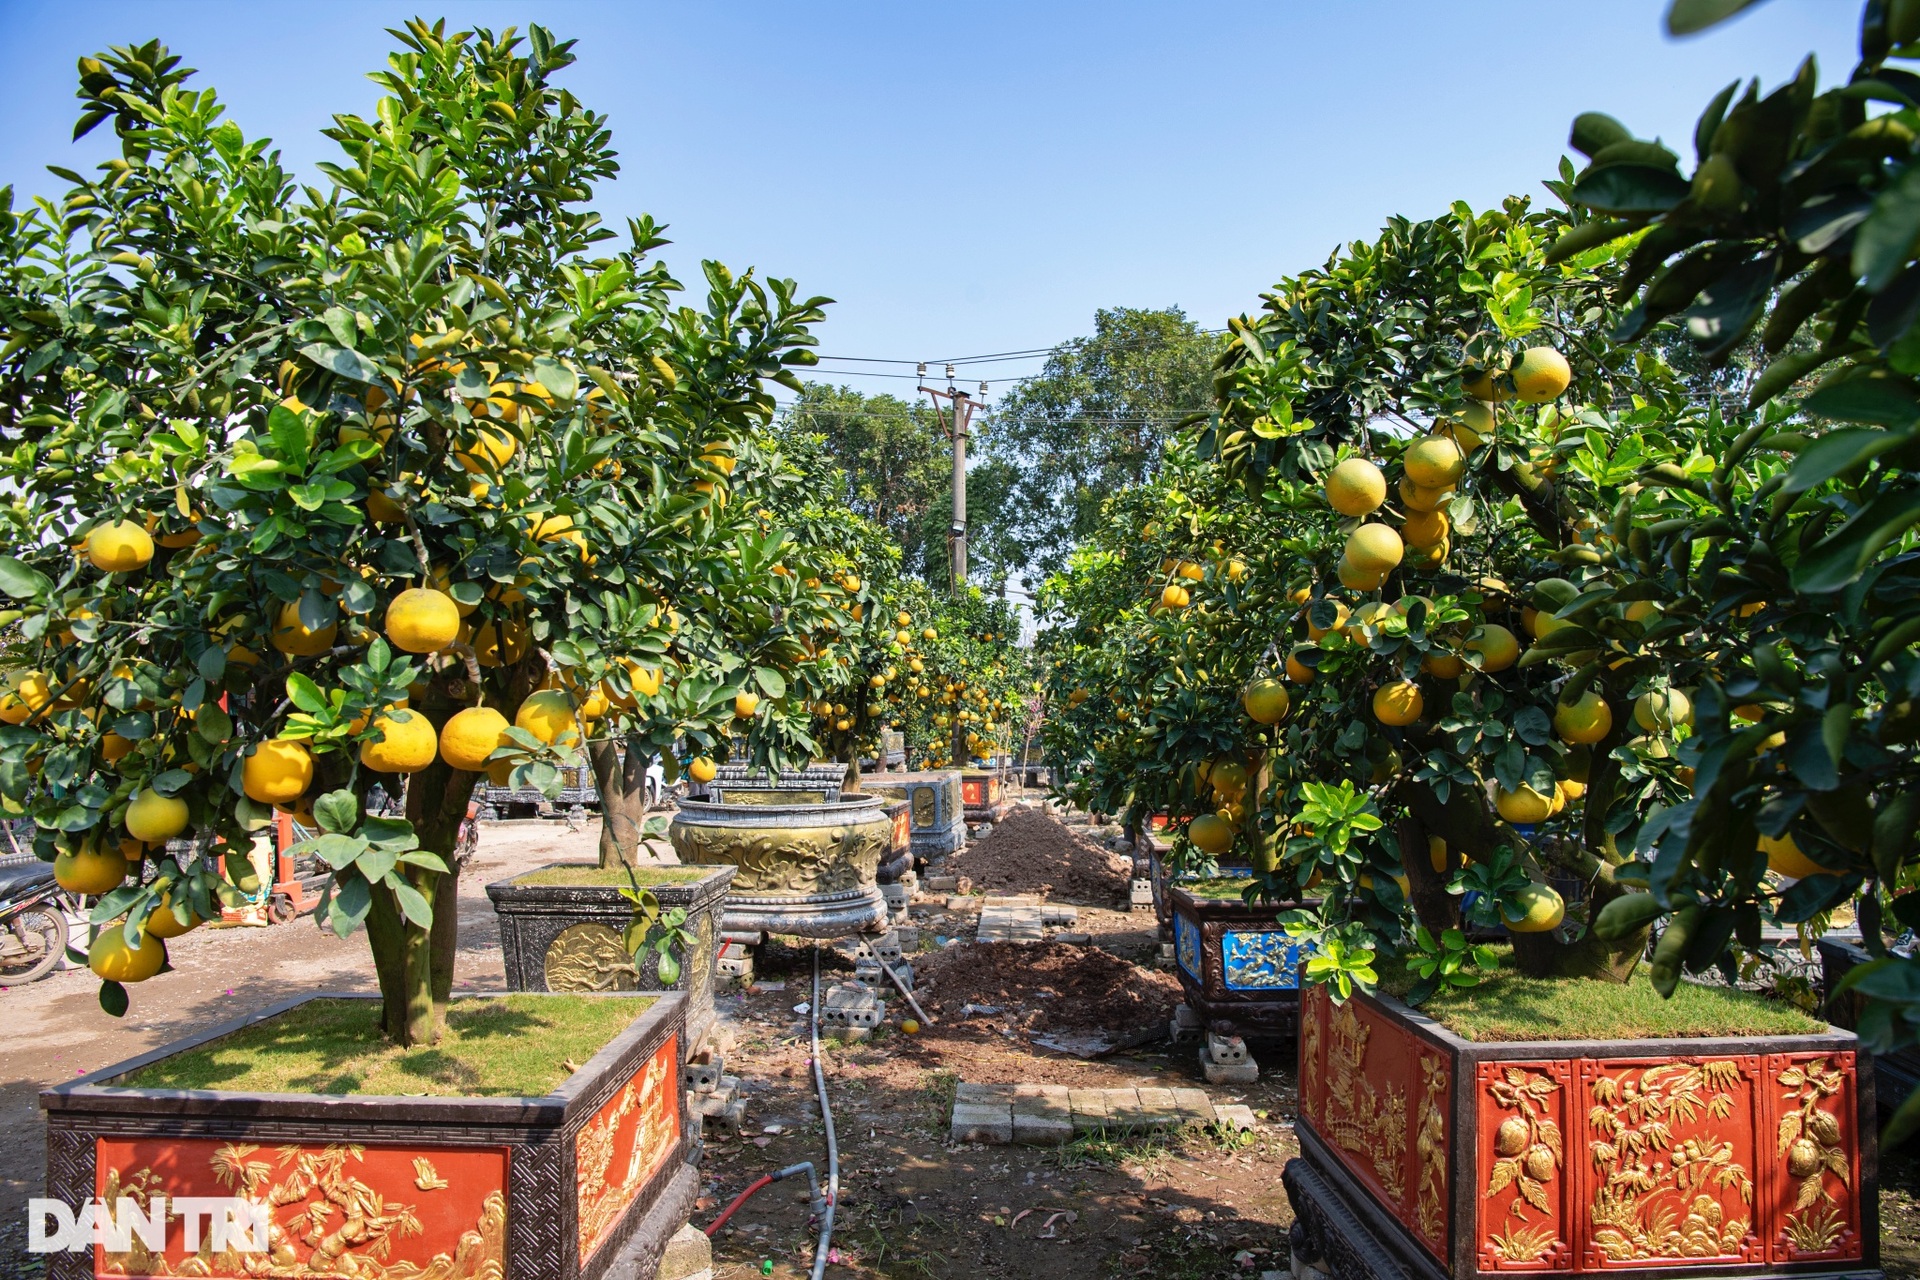 Unique 400-fruit Dien pomelo tree for sale for 200 million dong in Hanoi - 2